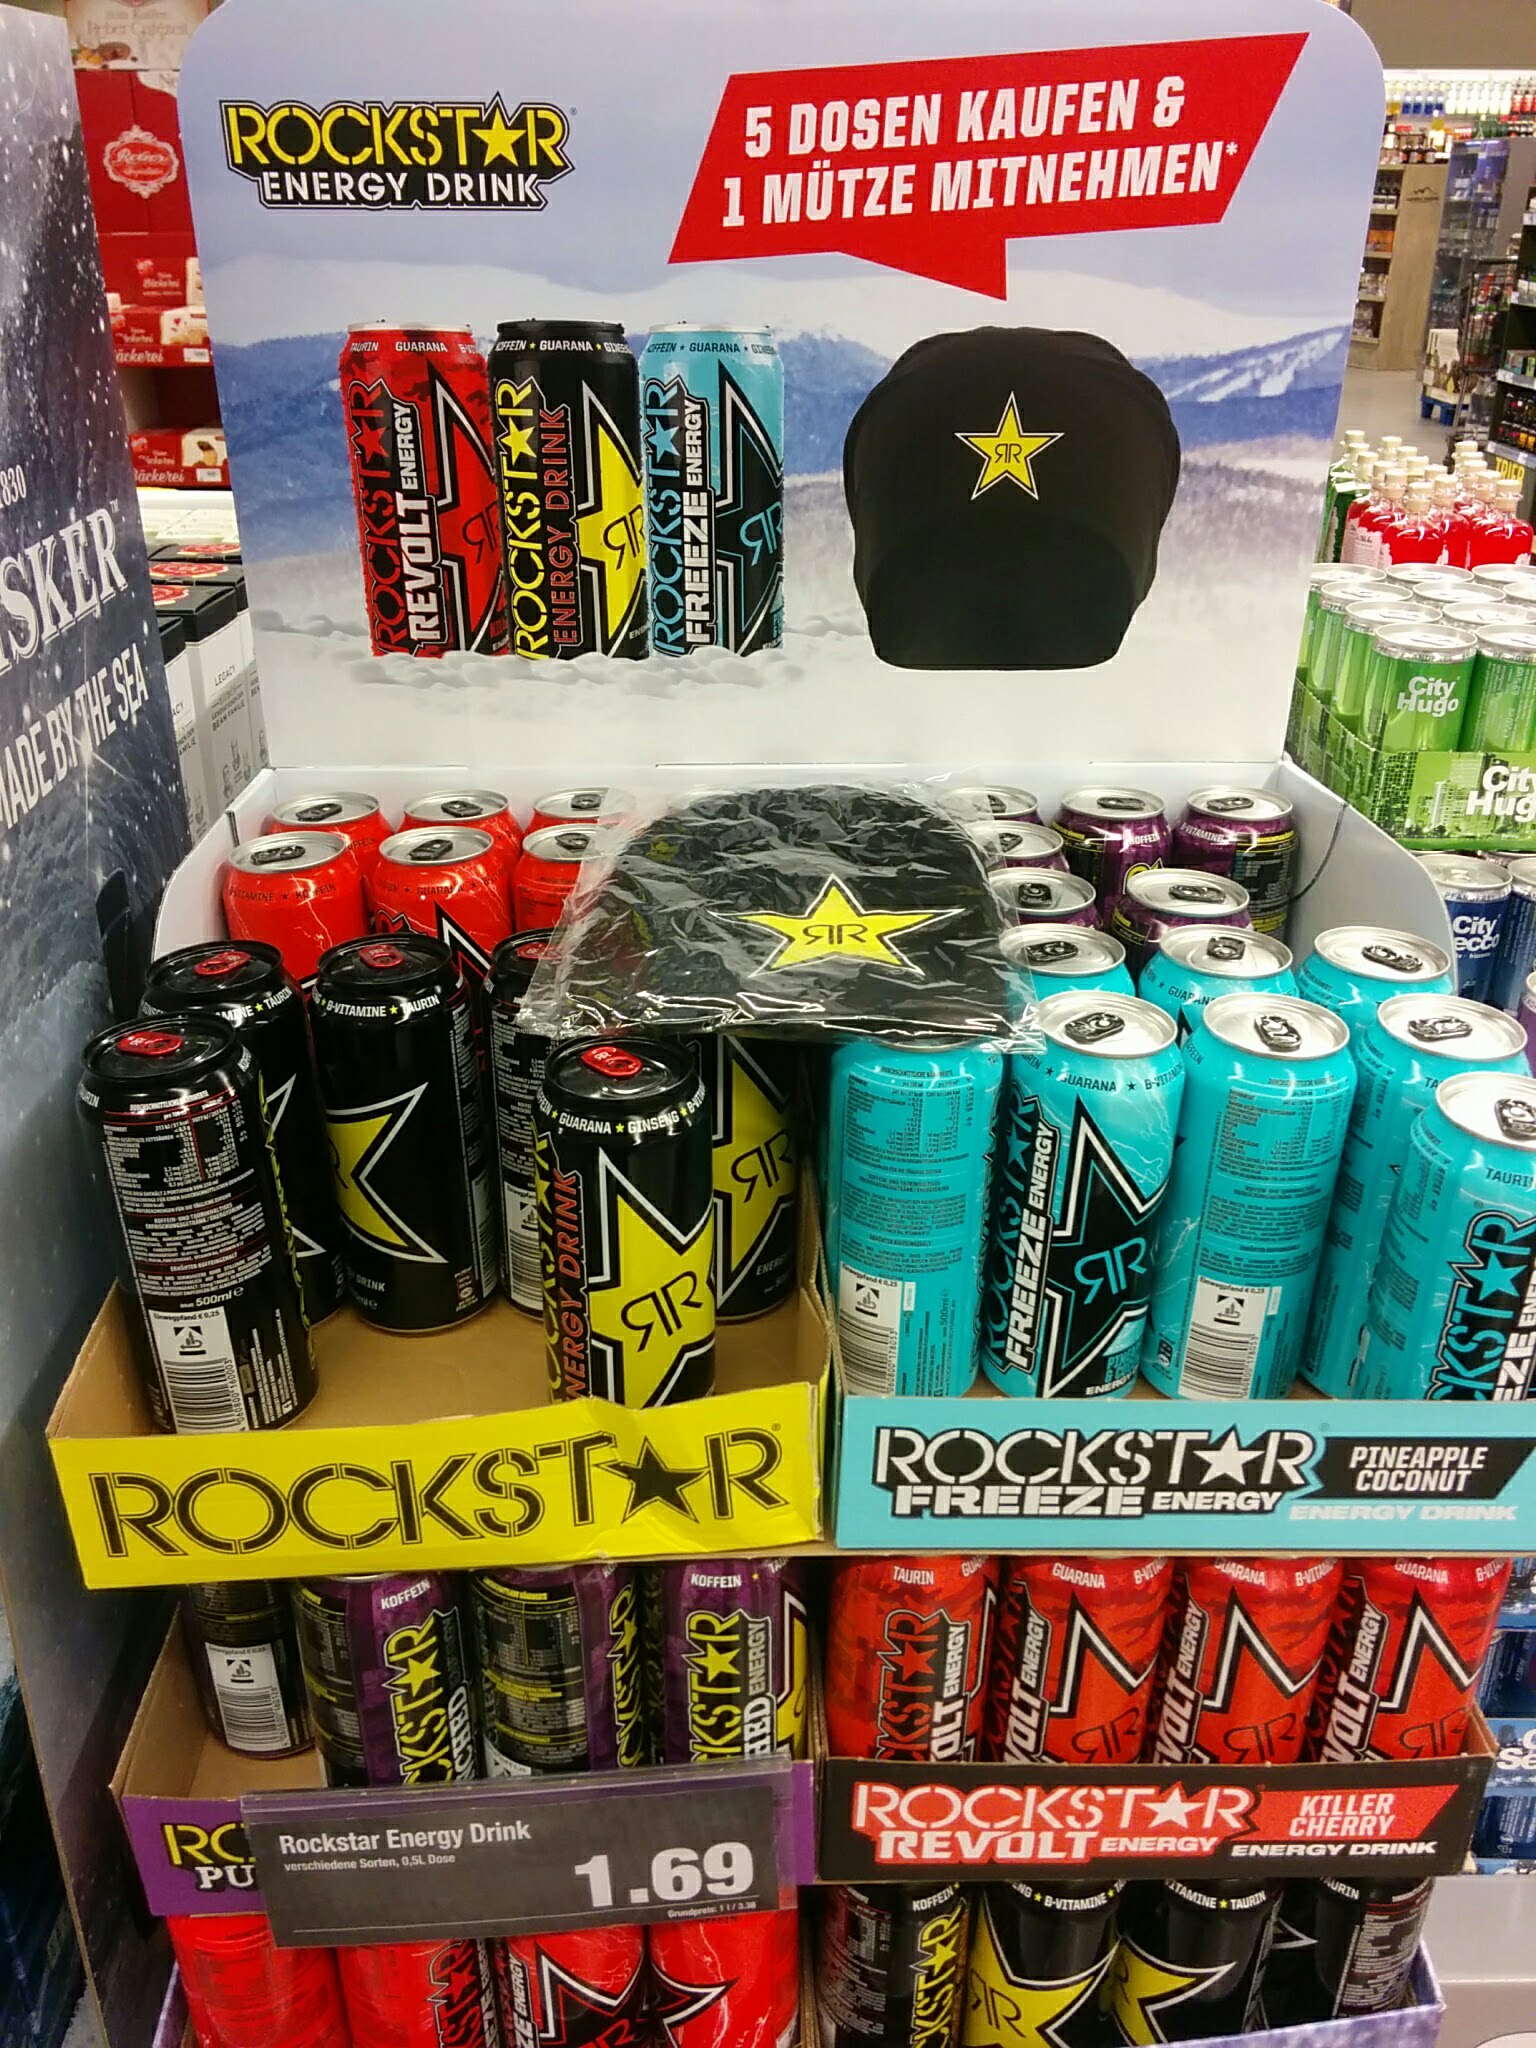 Rockstar Energy Drink - Mütze